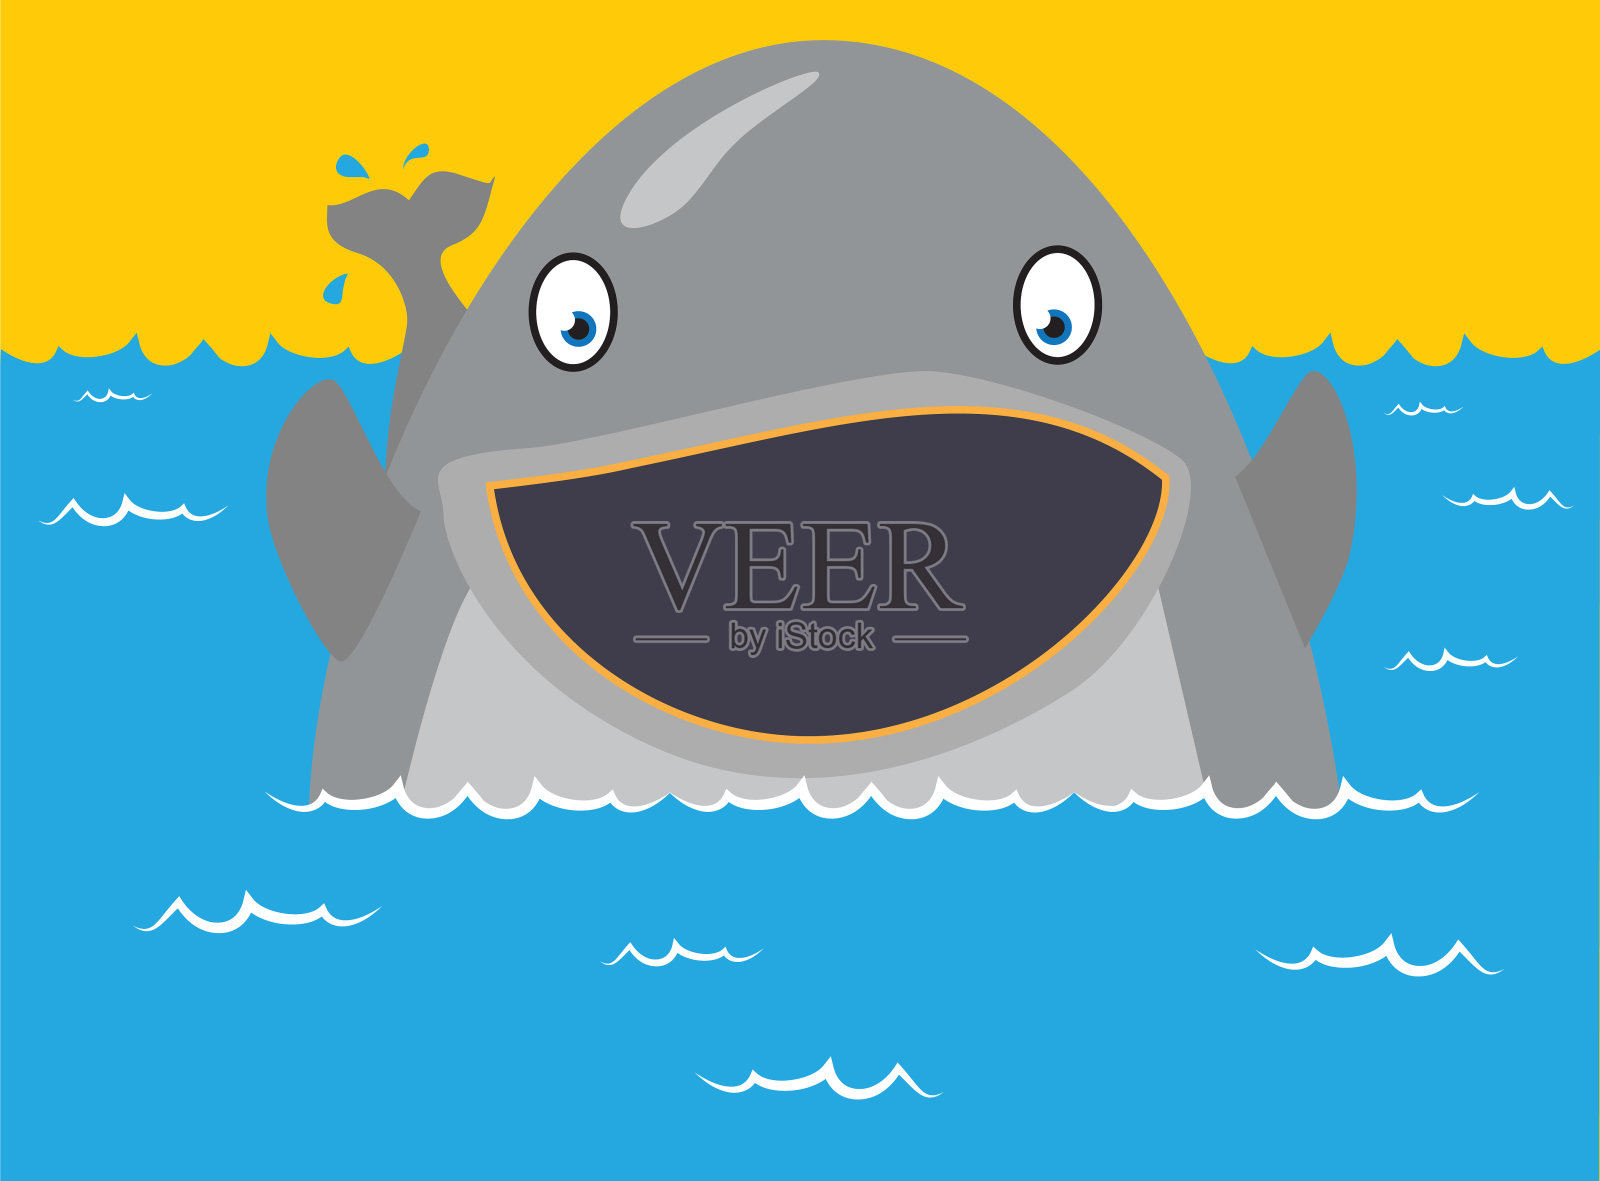 Happy Whale stock插图设计元素图片